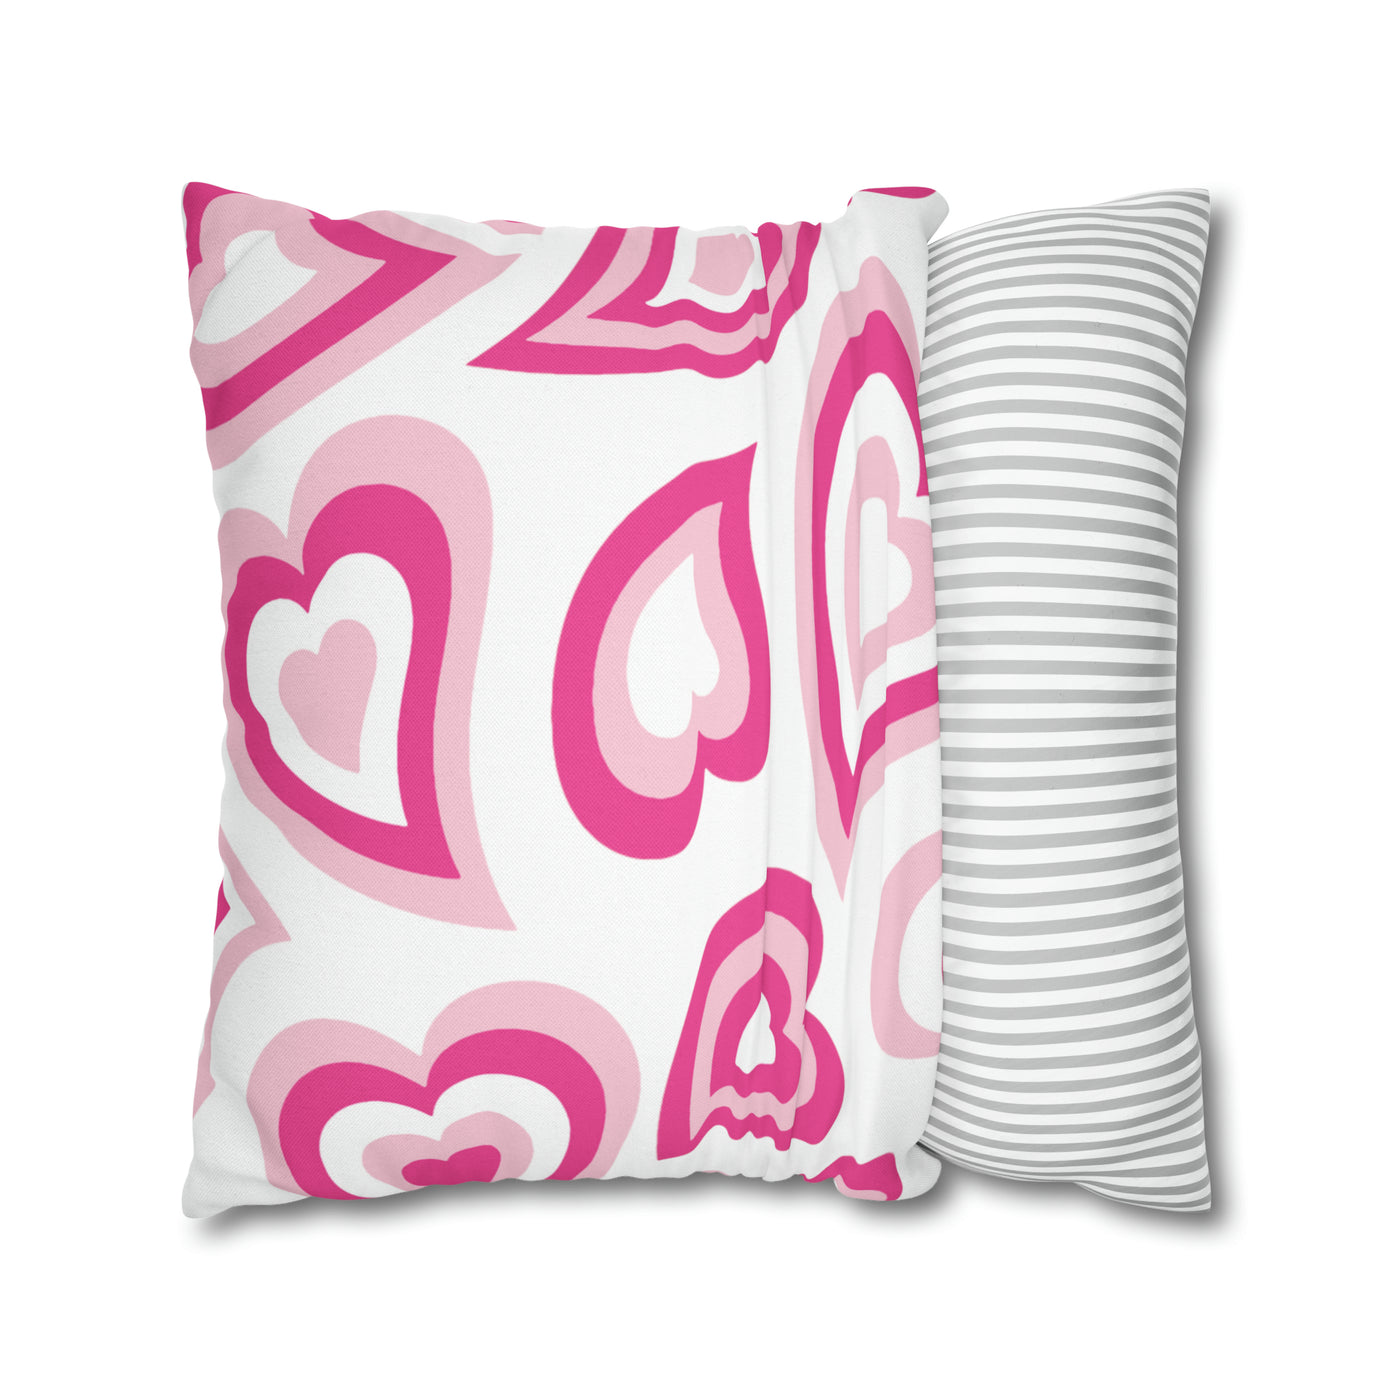 Barbie Retro Heart Pillow Cover - Pink Heart Pillow Cover, Heart Pillow, Pink Hearts, Valentine’s Day, Barbie Pillow, Barbie Dreamhouse